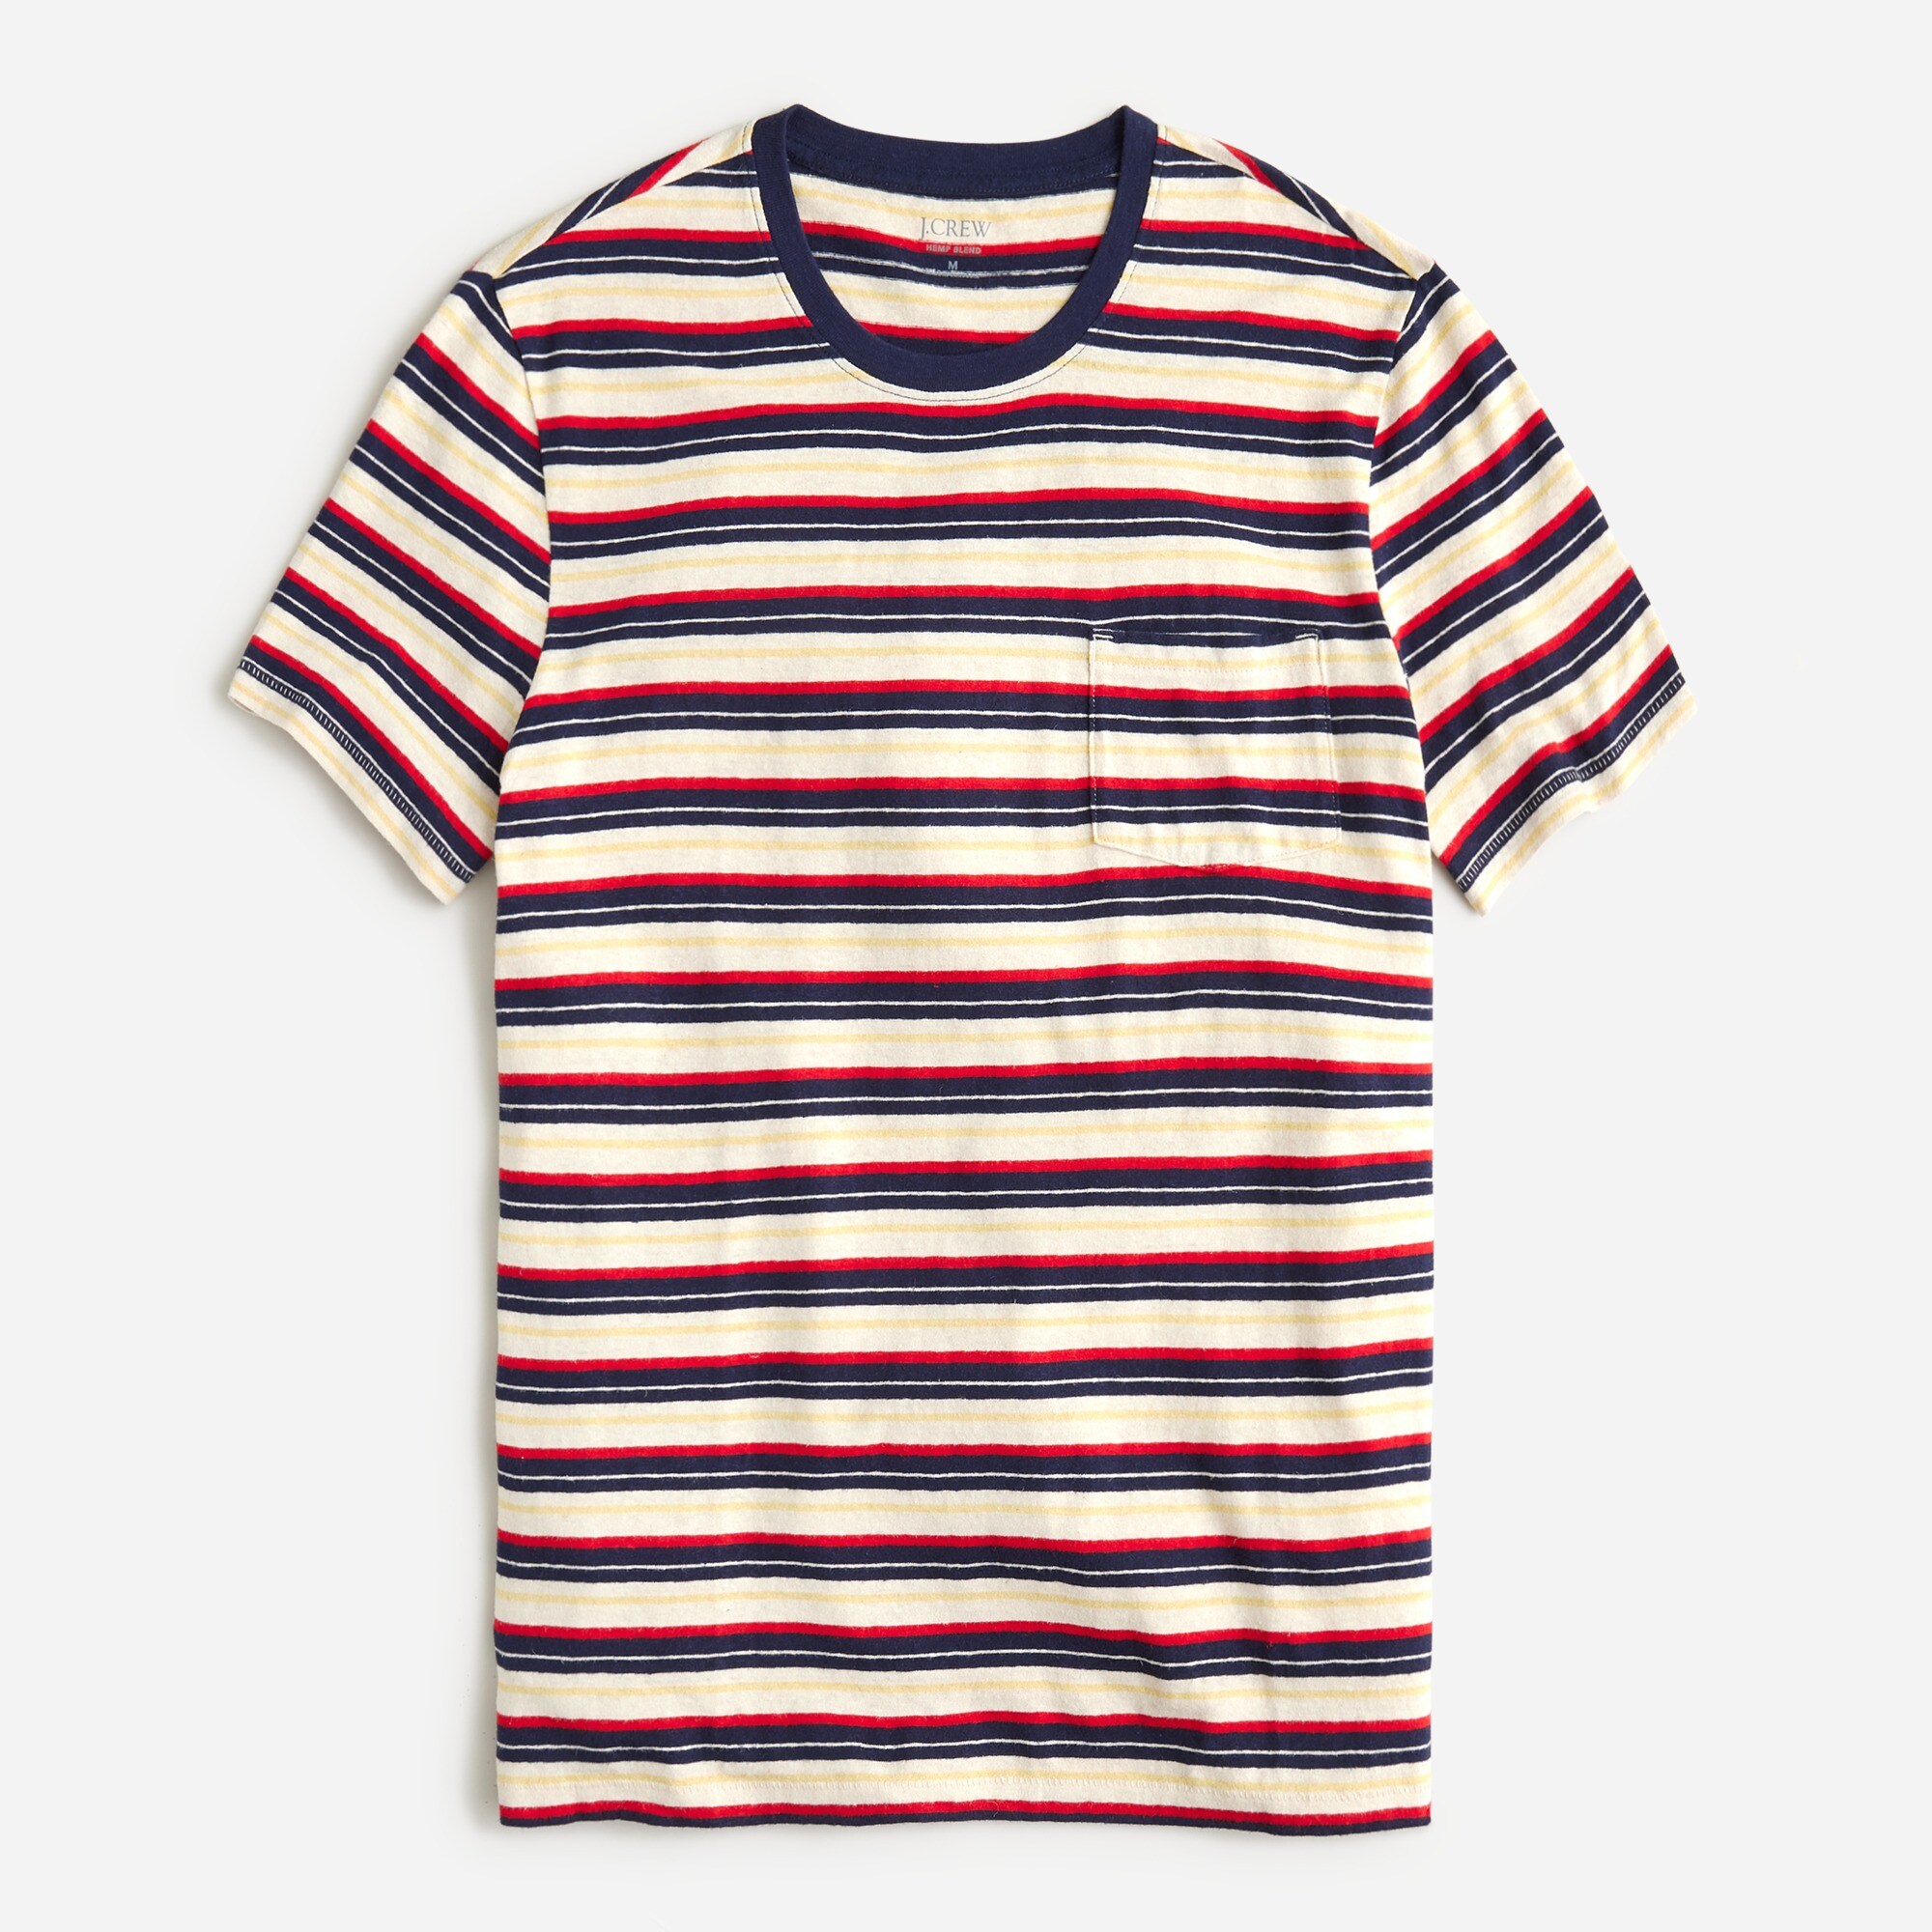  Hemp-organic cotton-blend pocket T-shirt in stripe